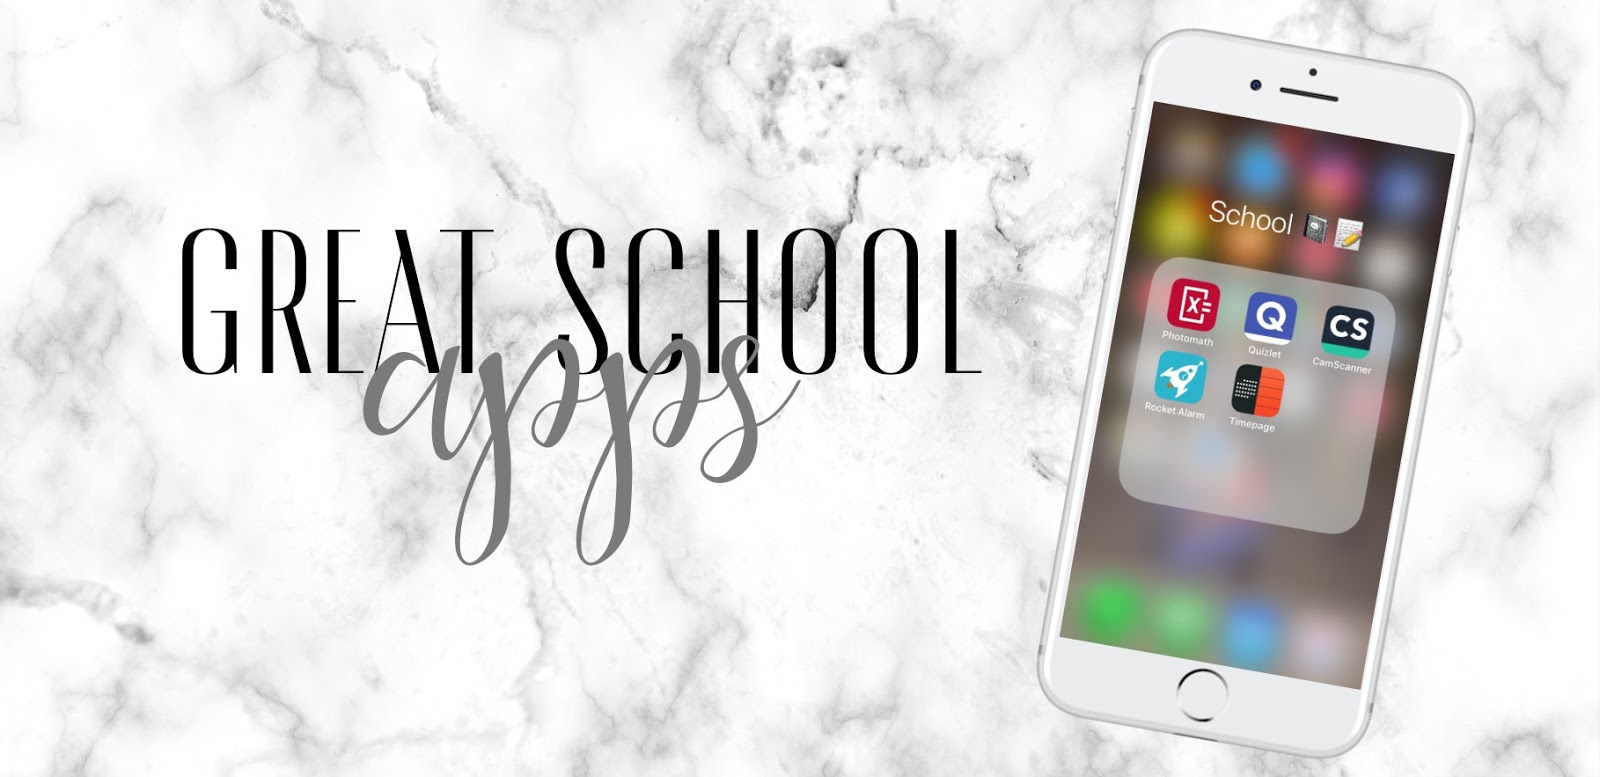 Great School Apps!